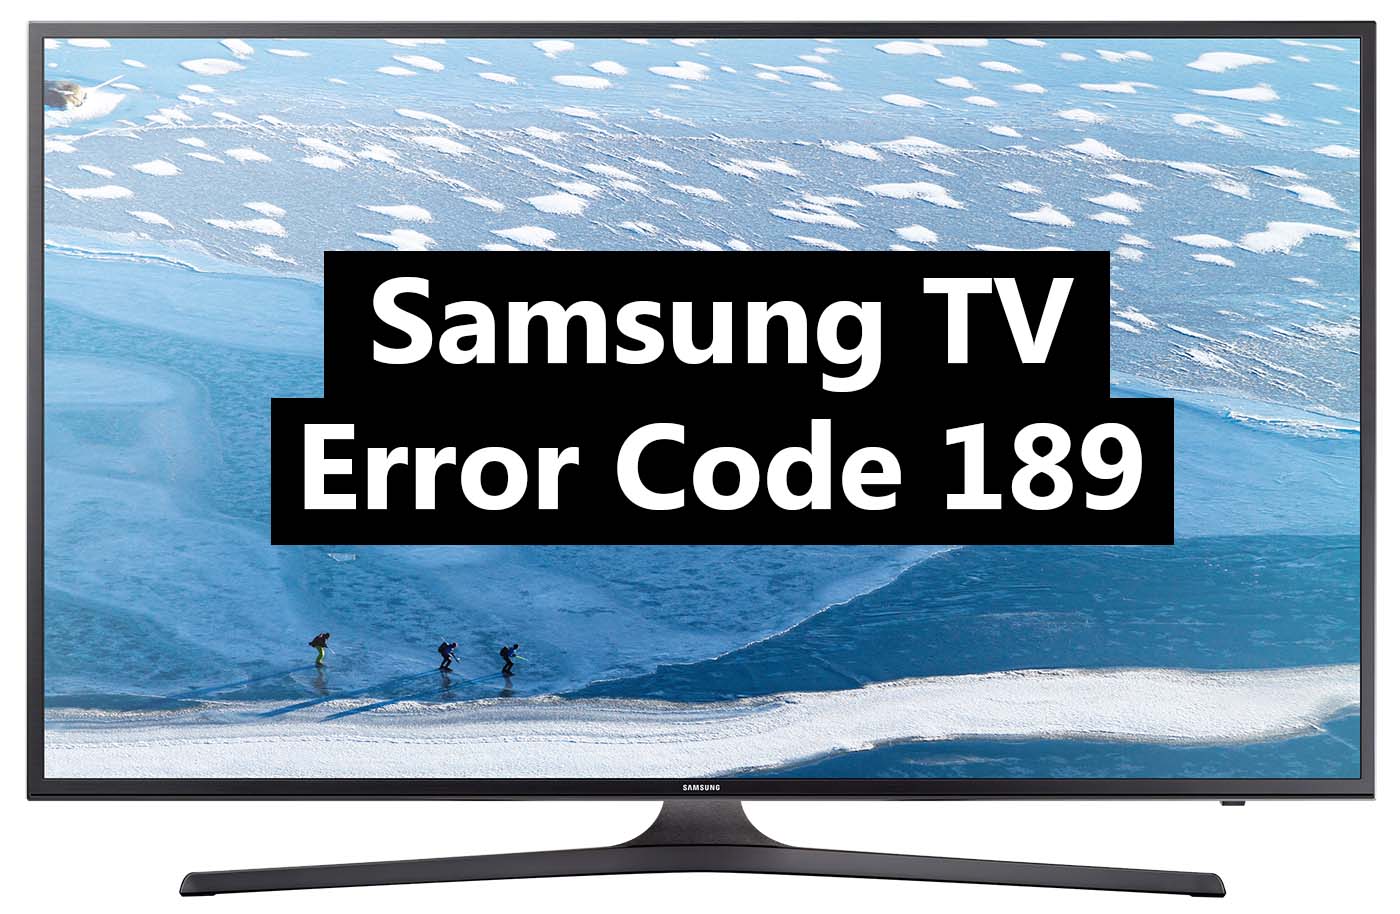 Samsung TV Error Code 189